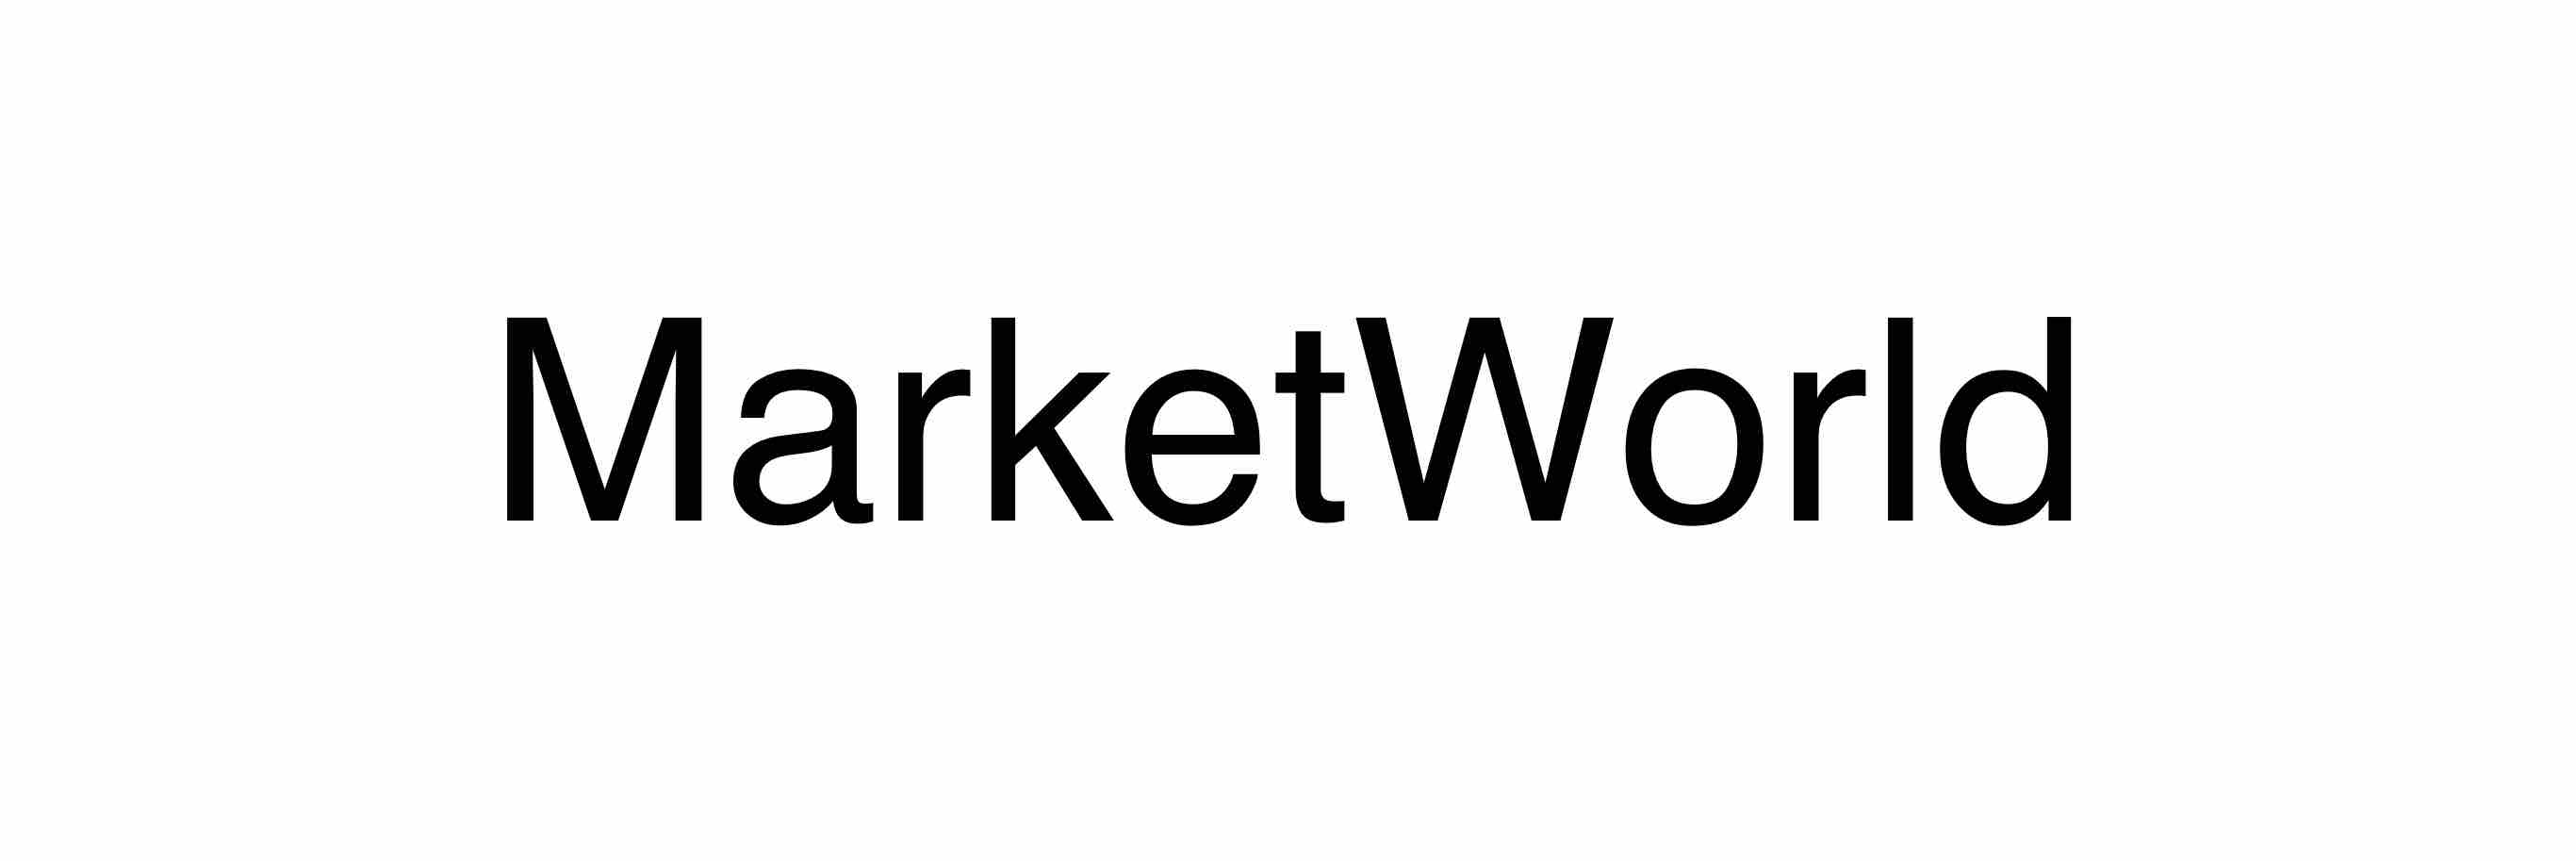 The word "MarketWorld"